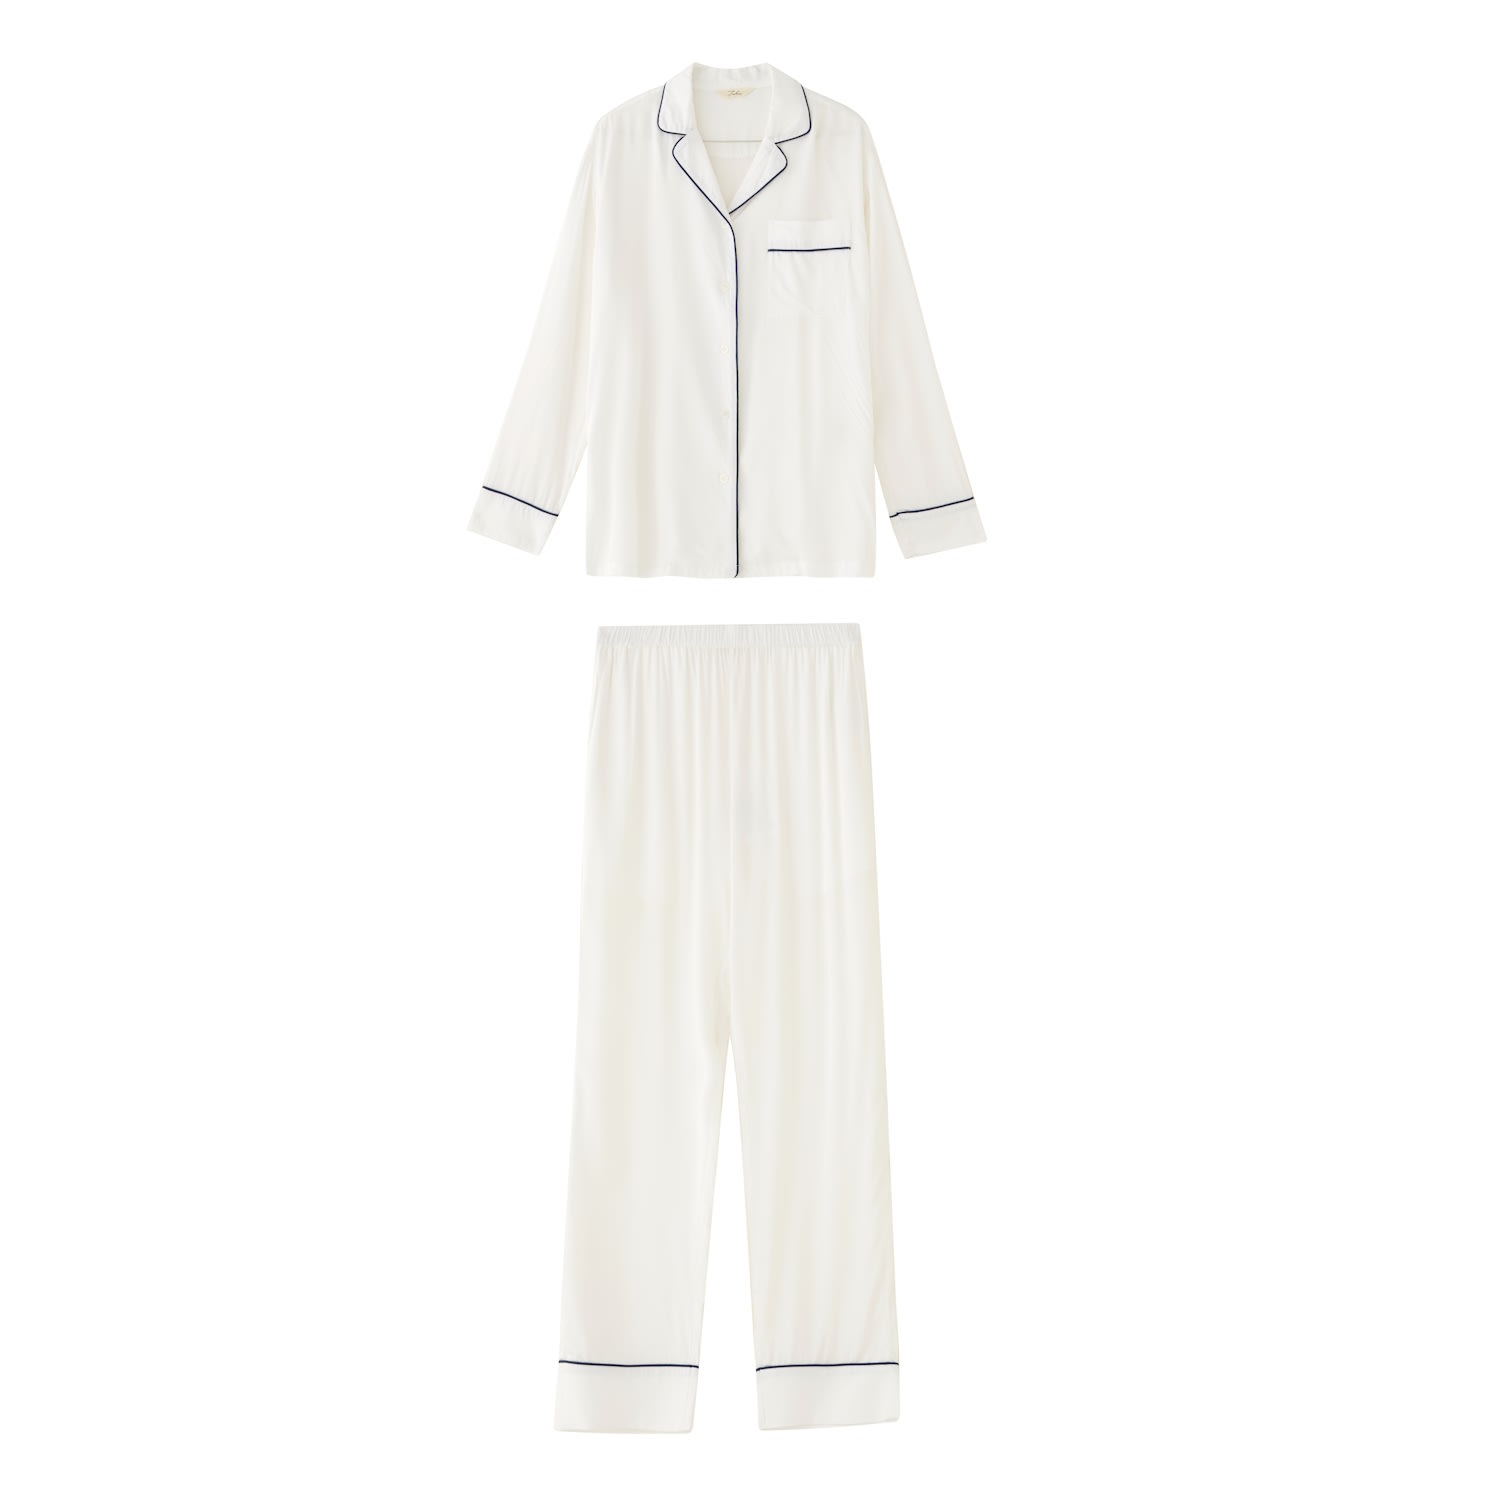 Women’s Comfort Bamboo Pajama Set - White Medium Notlabeled